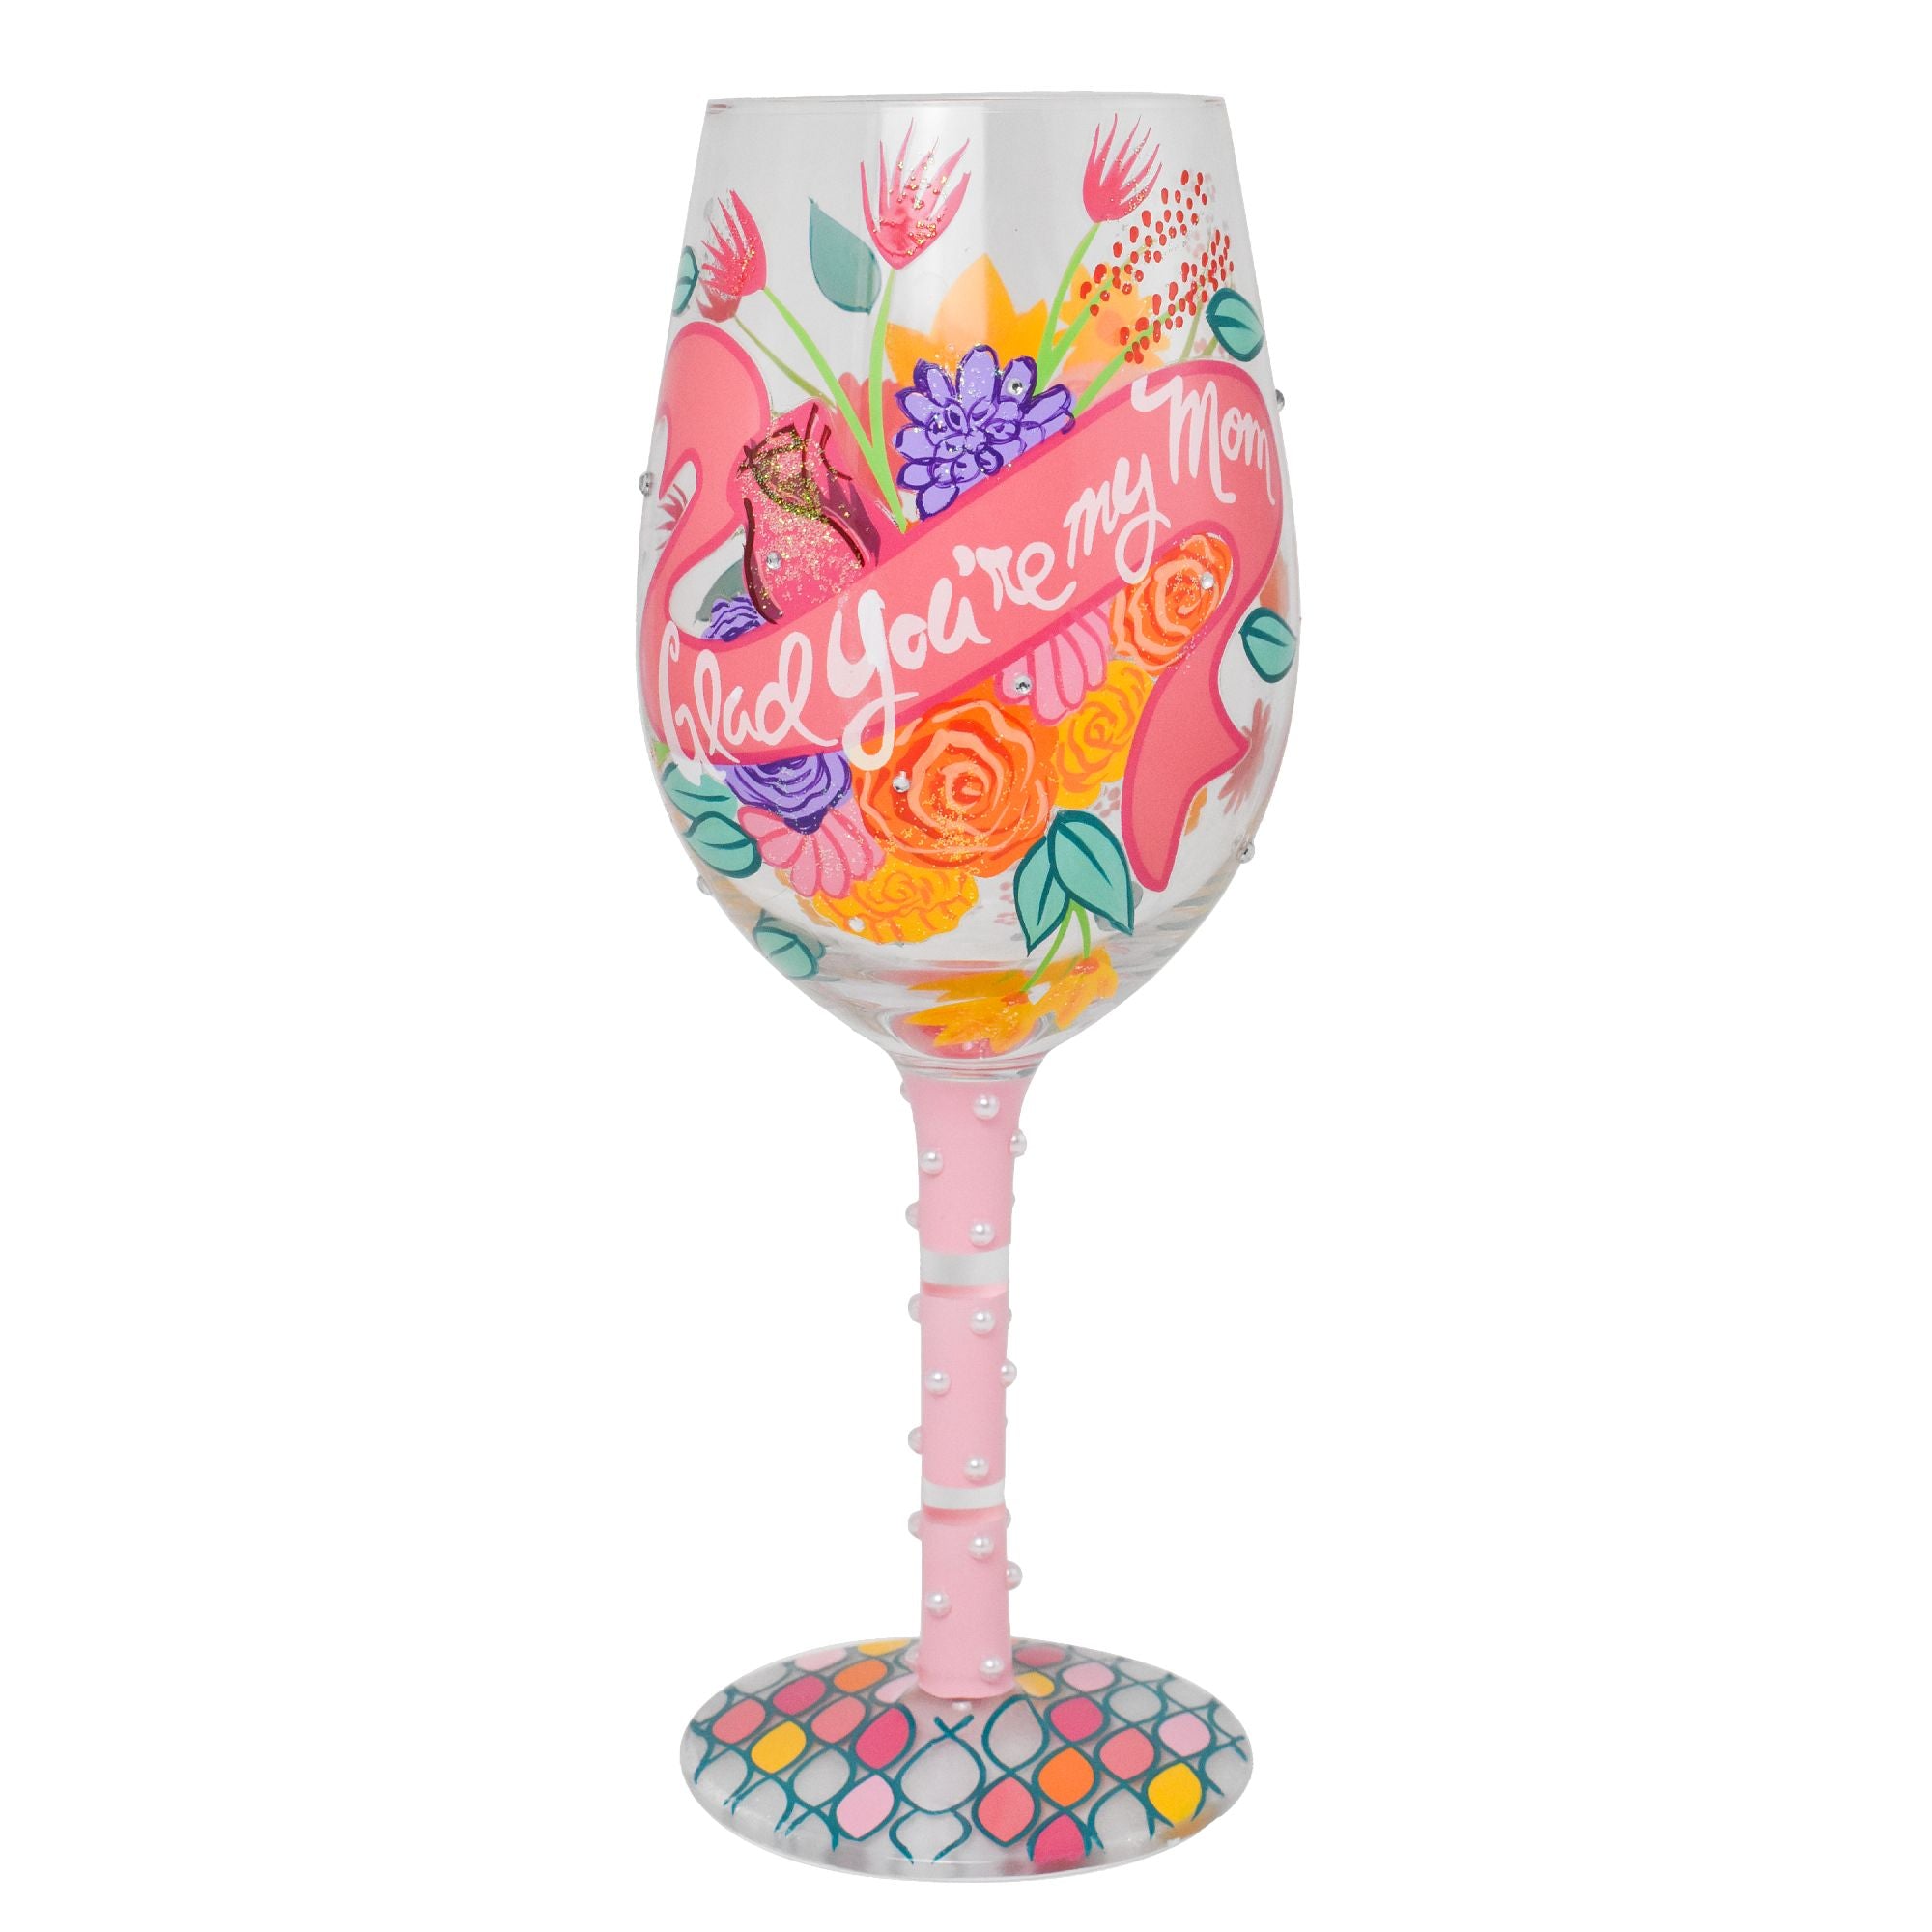 Mama Hen - Stemless Wine Glass for Mom - Cute Funny Wine Gift Idea - U -  bevvee